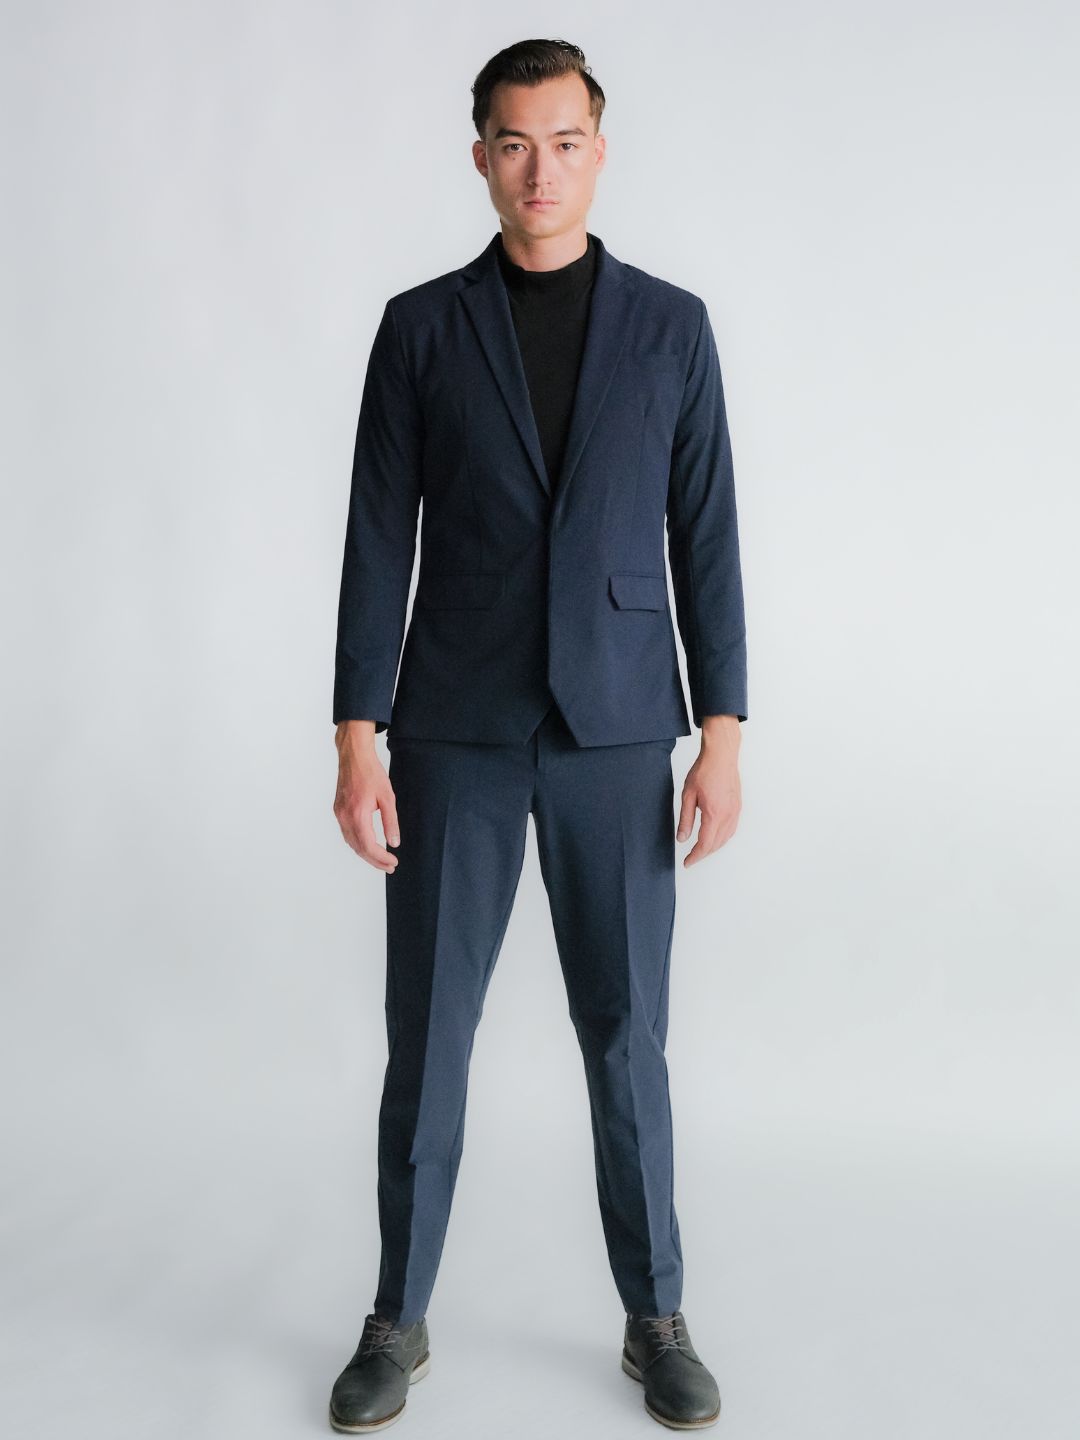 Ultra Suit 3.0 單排扣套裝組合 午夜藍 - TRANZEND